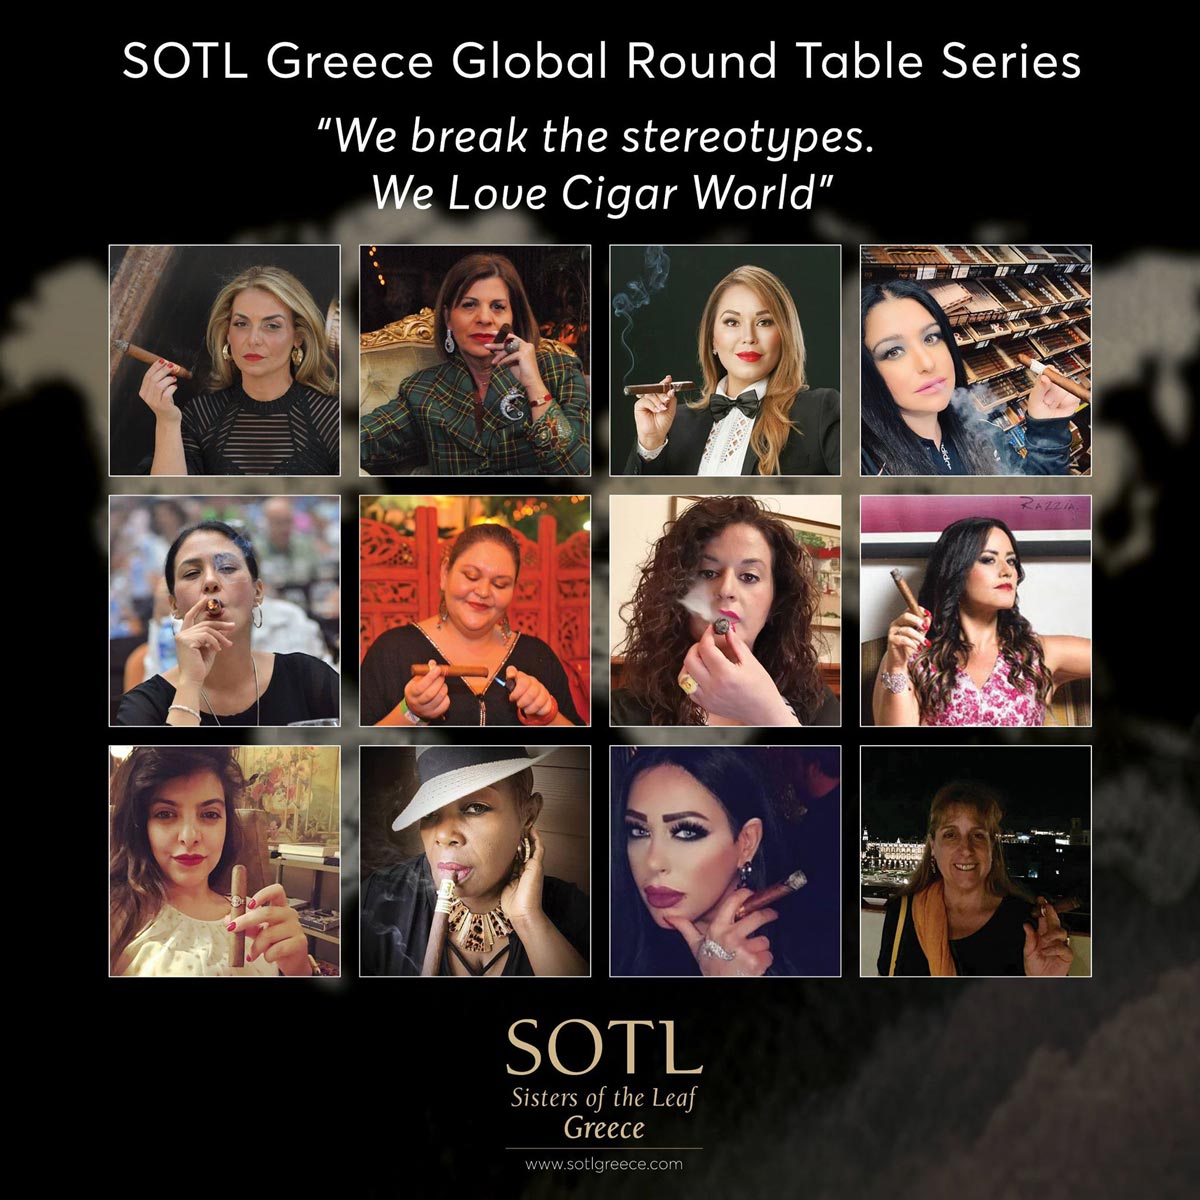 We break the stereotypes. We love cigar world - SOTL Greece